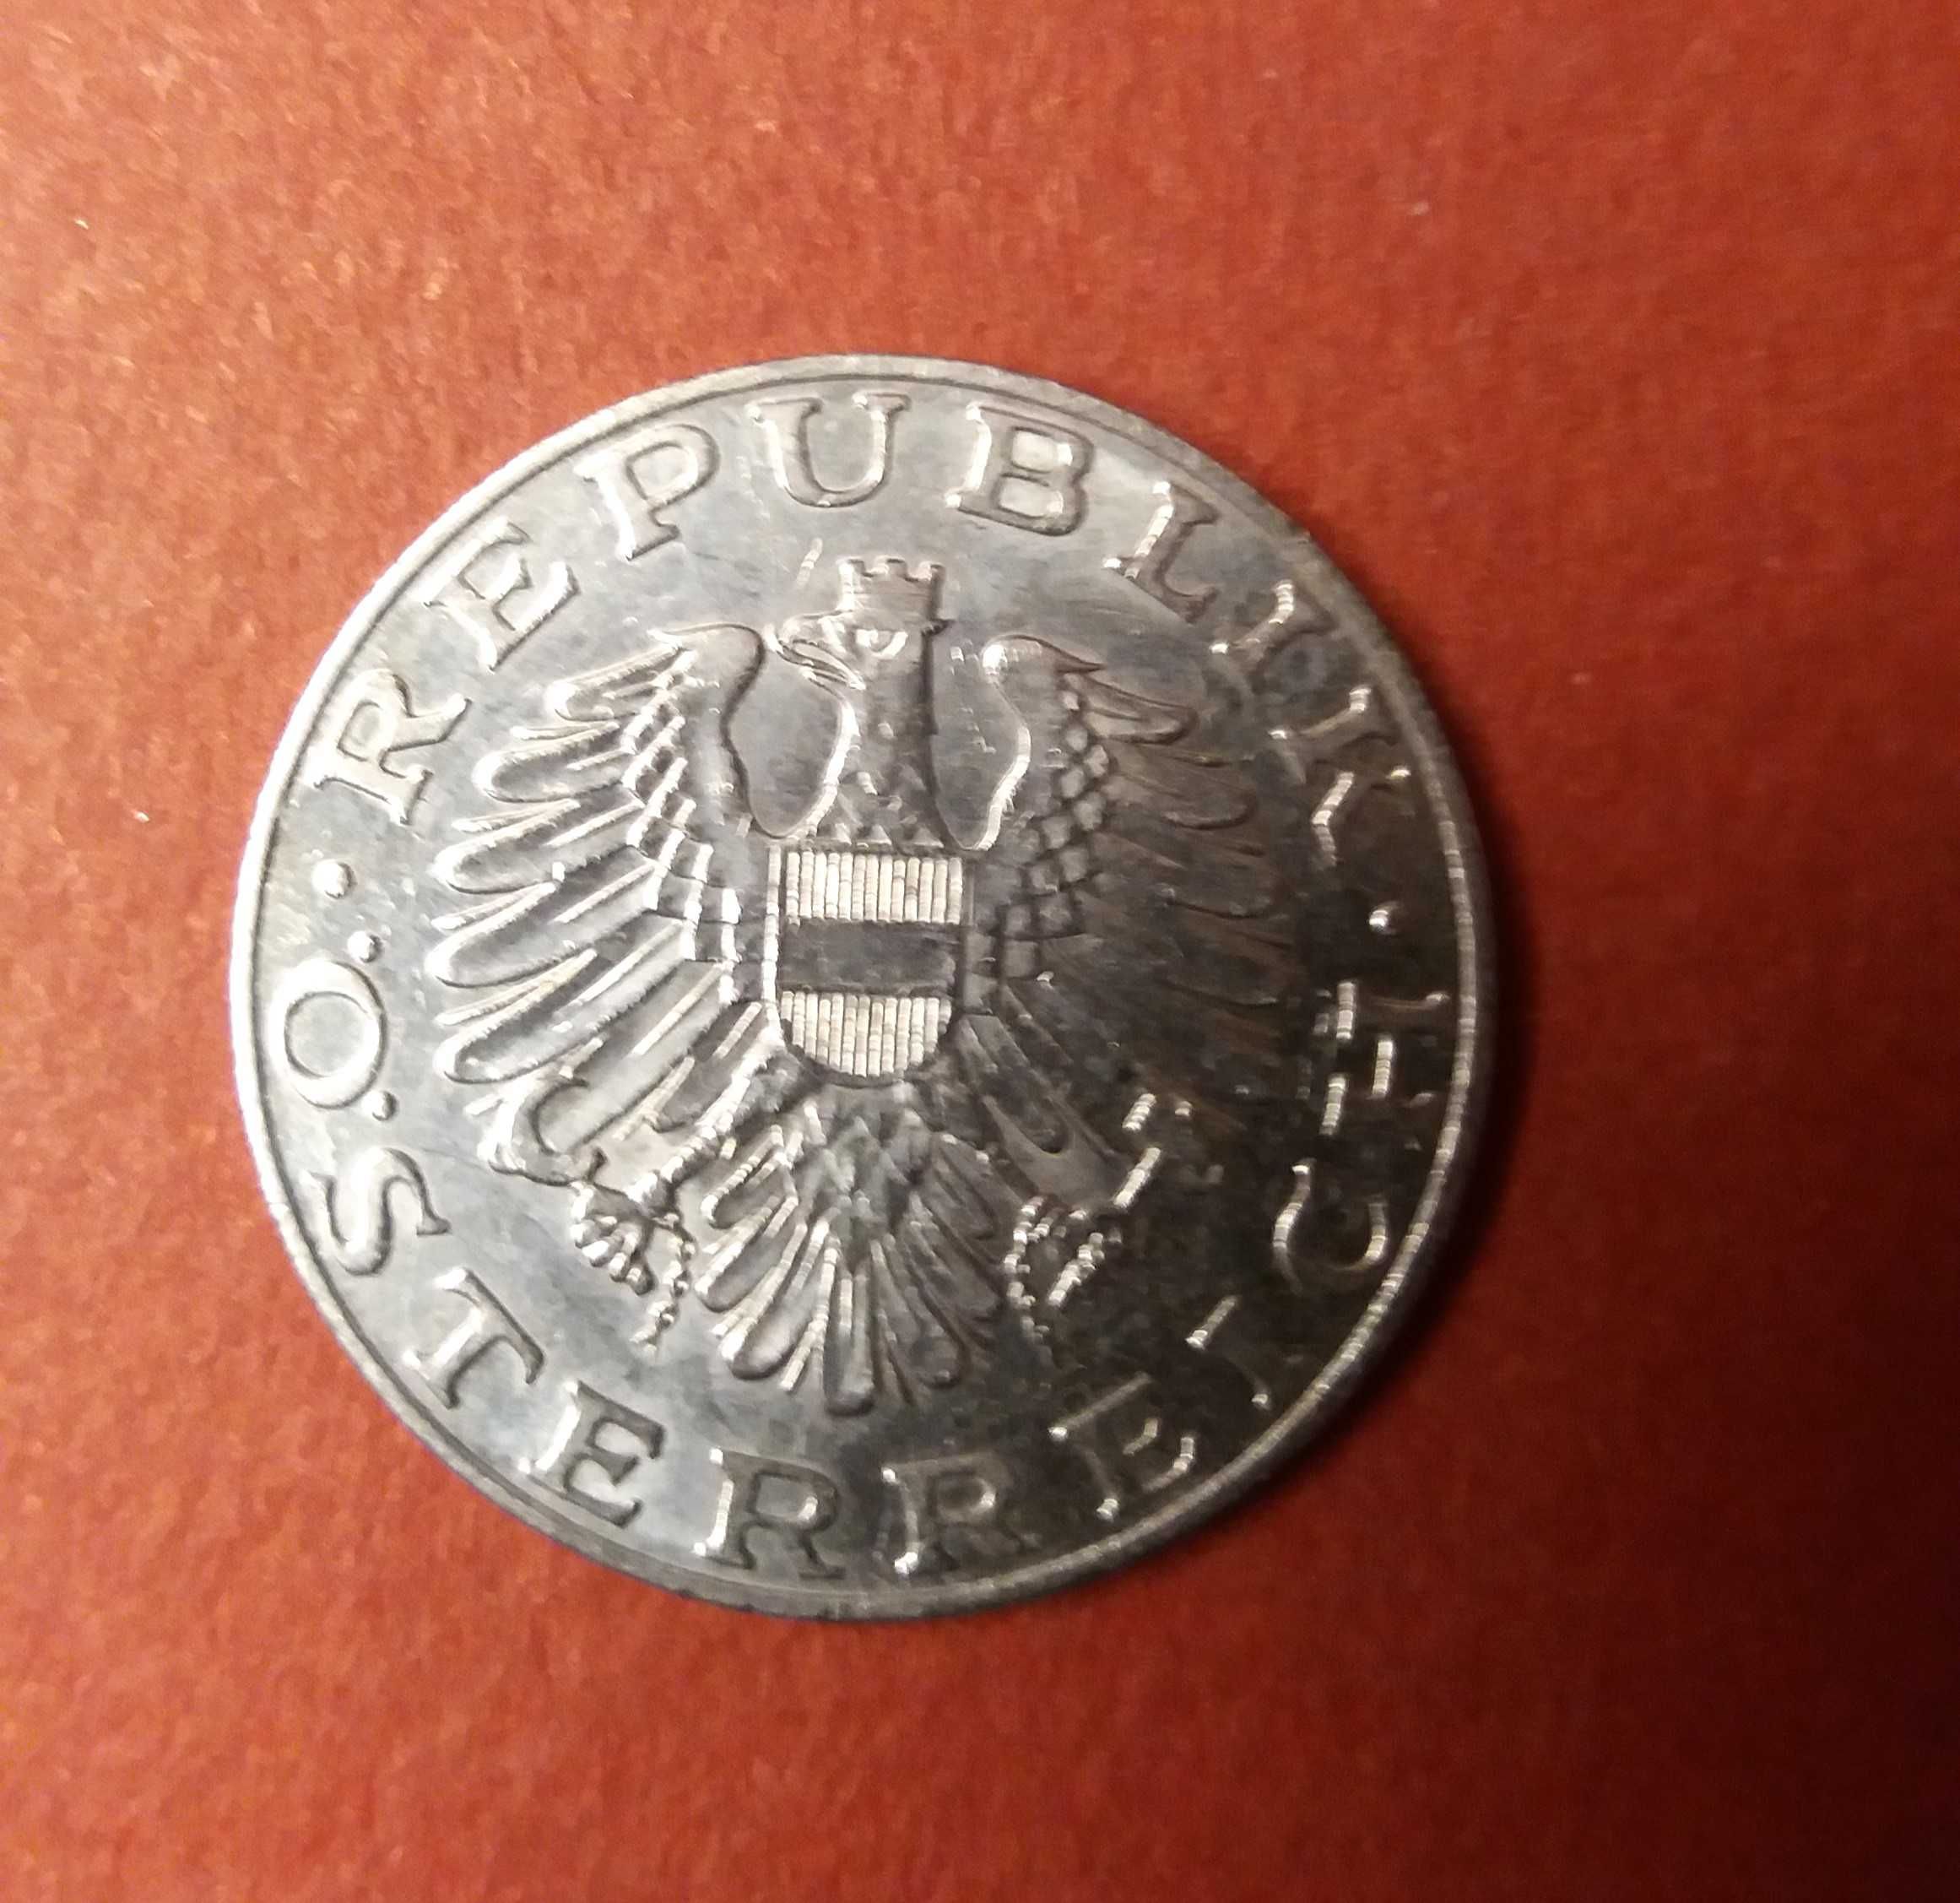 AUSTRIA - 3 ładne monety 10 Schilling  1975, 1987, 1995